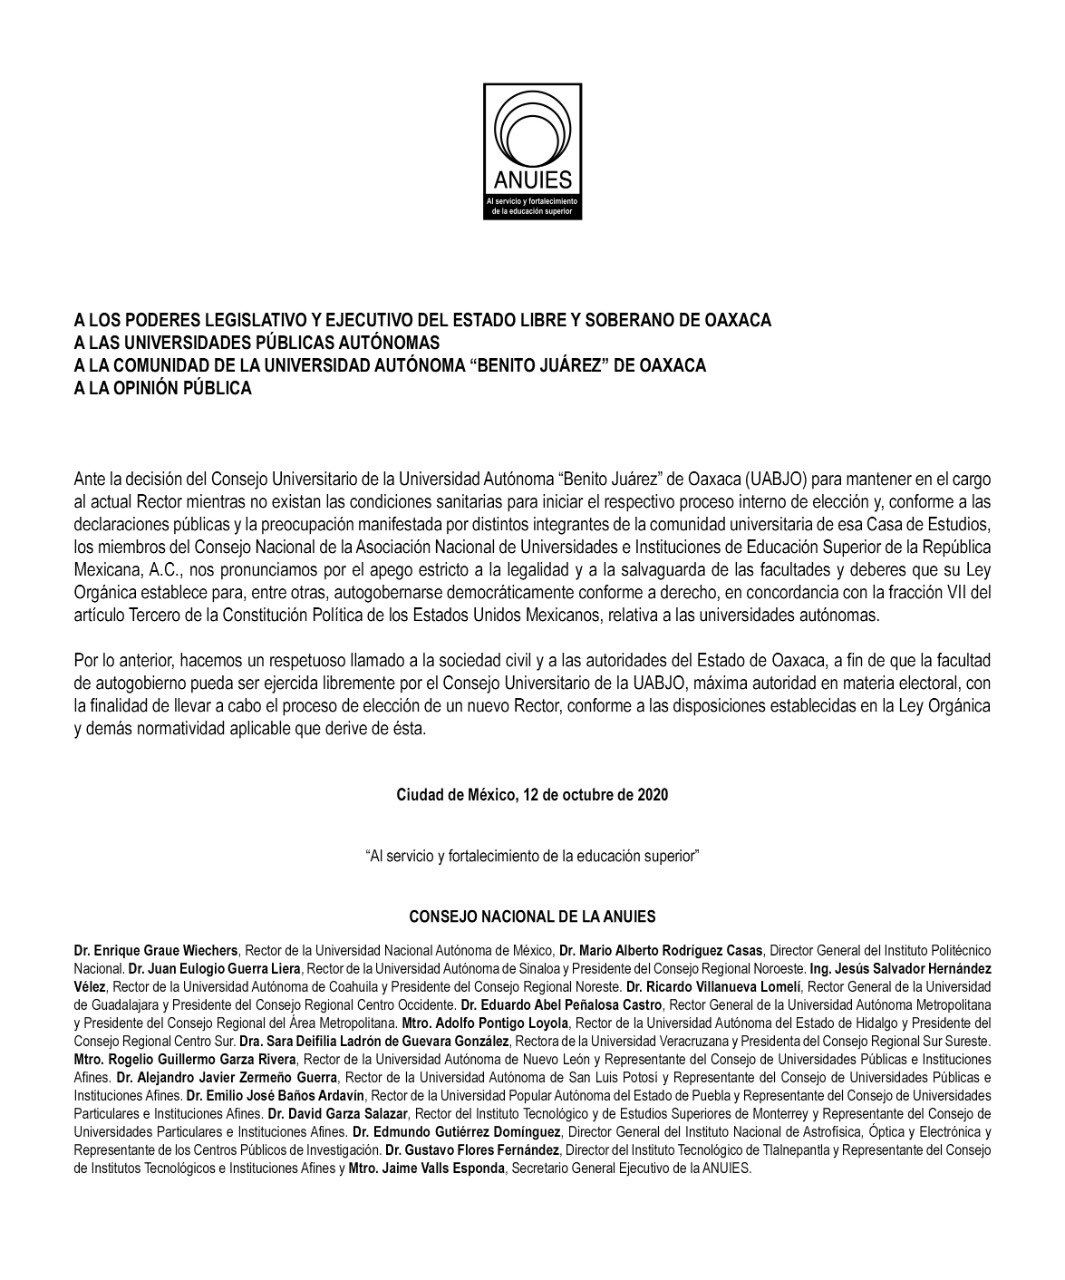 Llama ANUIES a respetar autonomía de la Universidad Autónoma “Benito Juárez” de Oaxaca